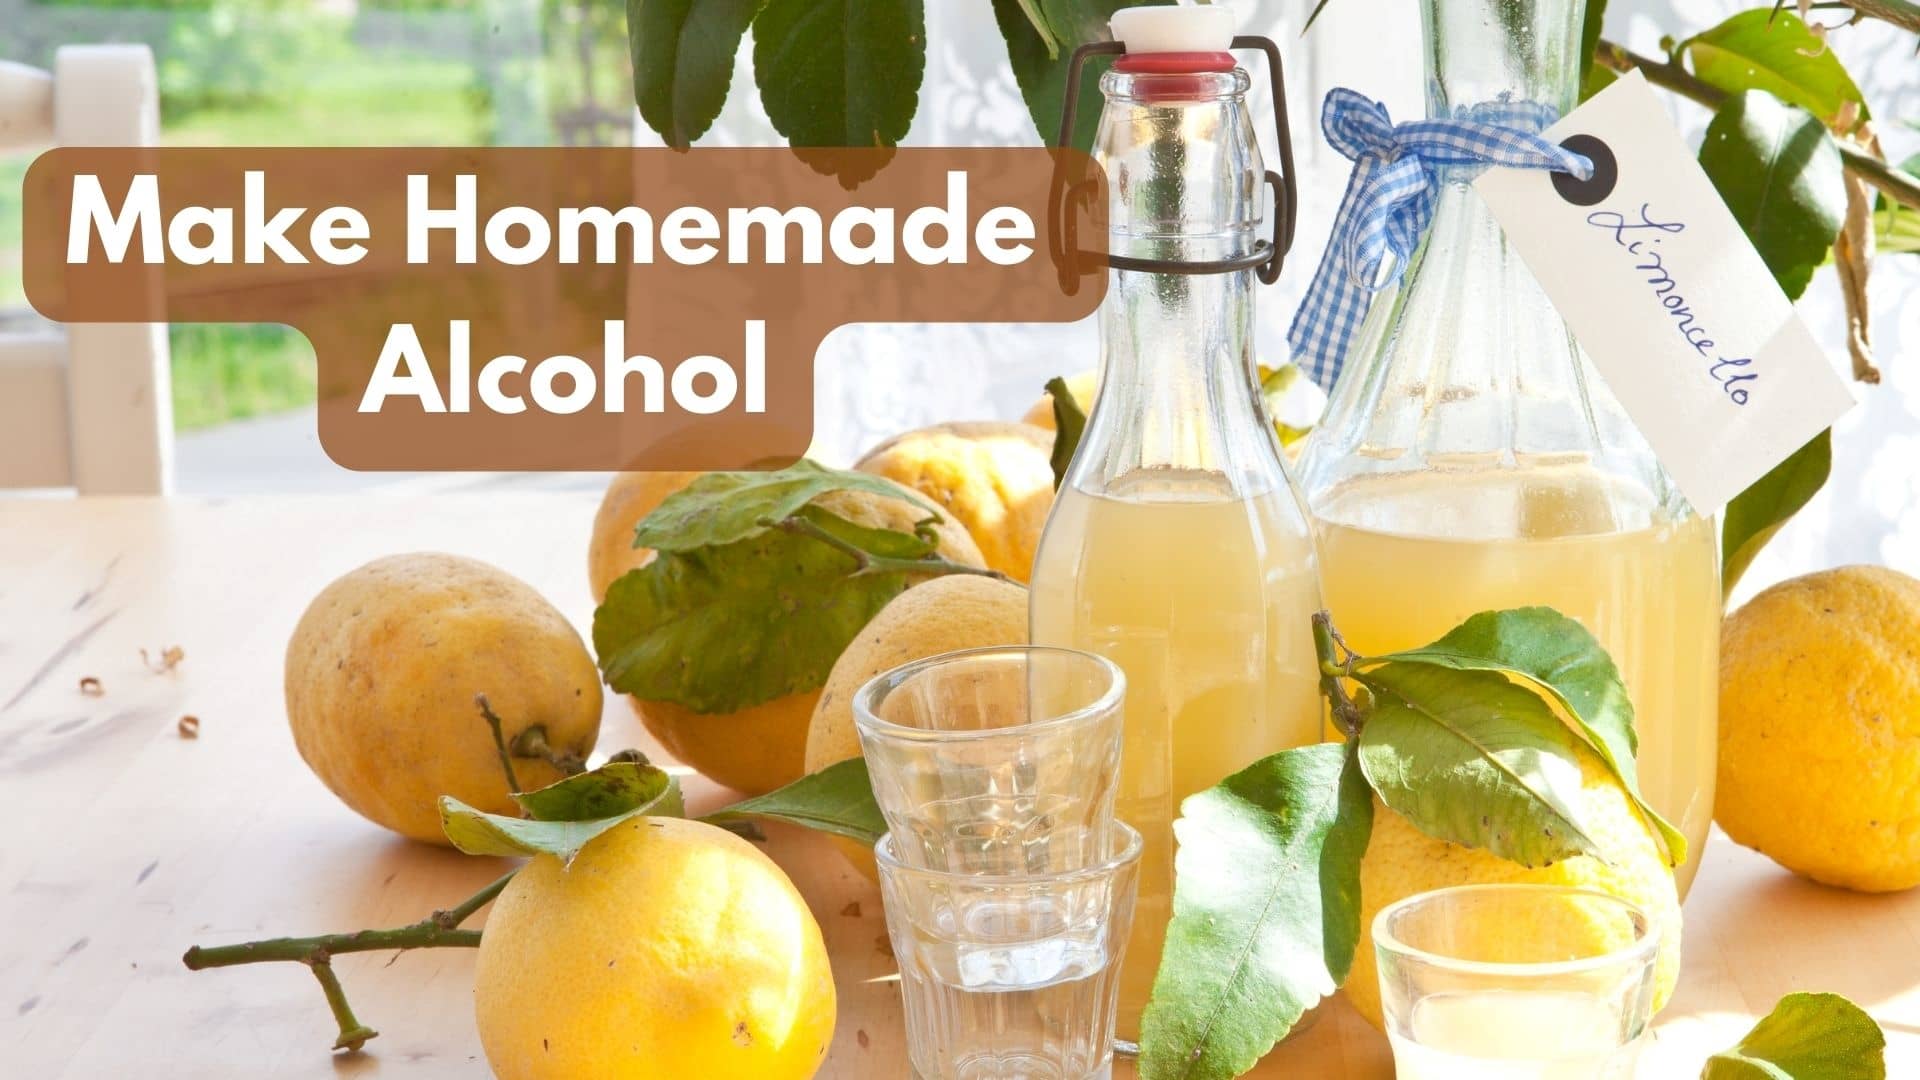 How Can You Make Homemade Alcohol?